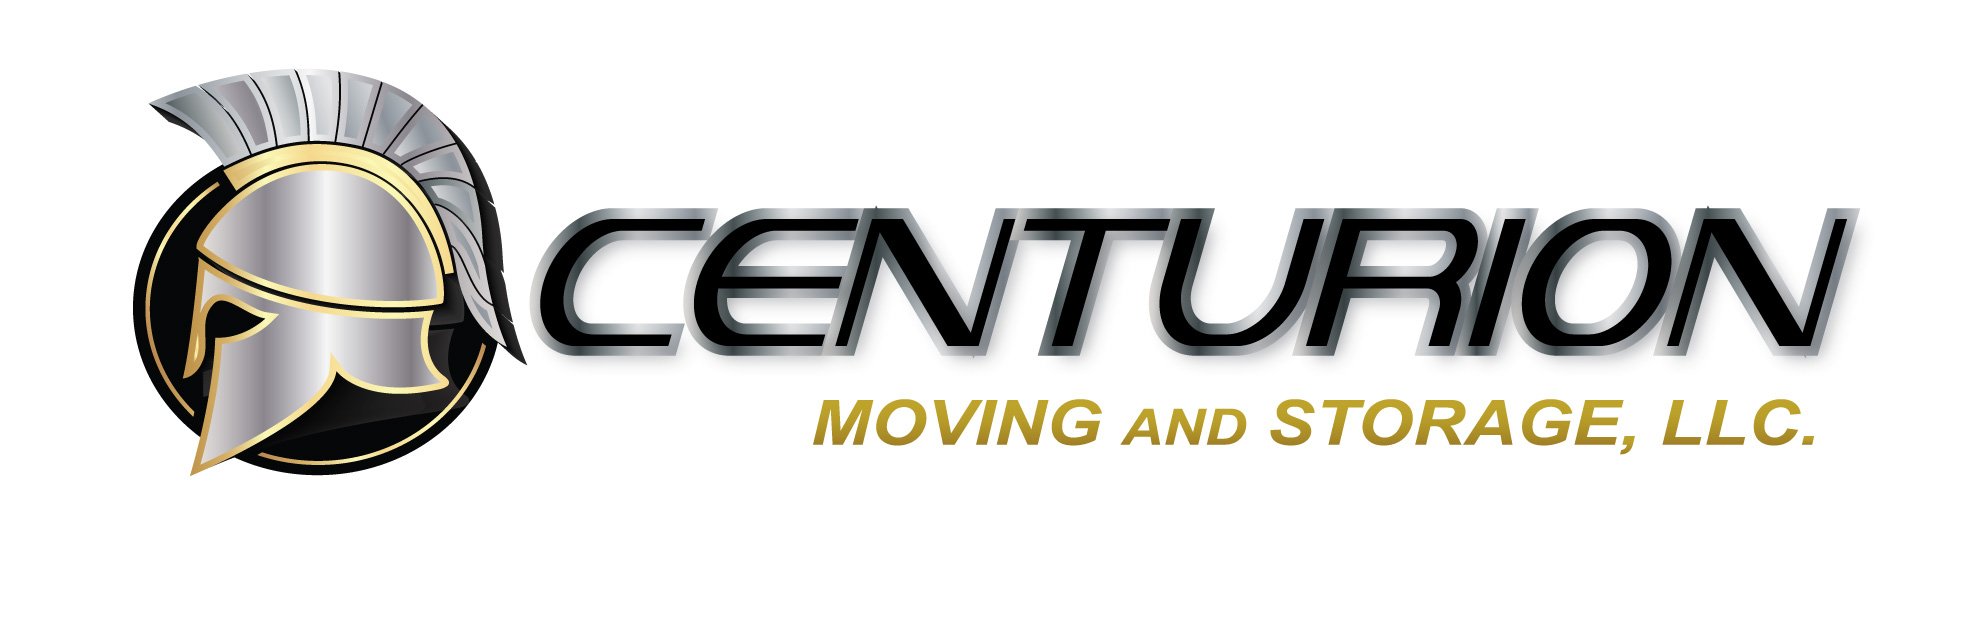 Centurion Moving & Storage, LLC Logo